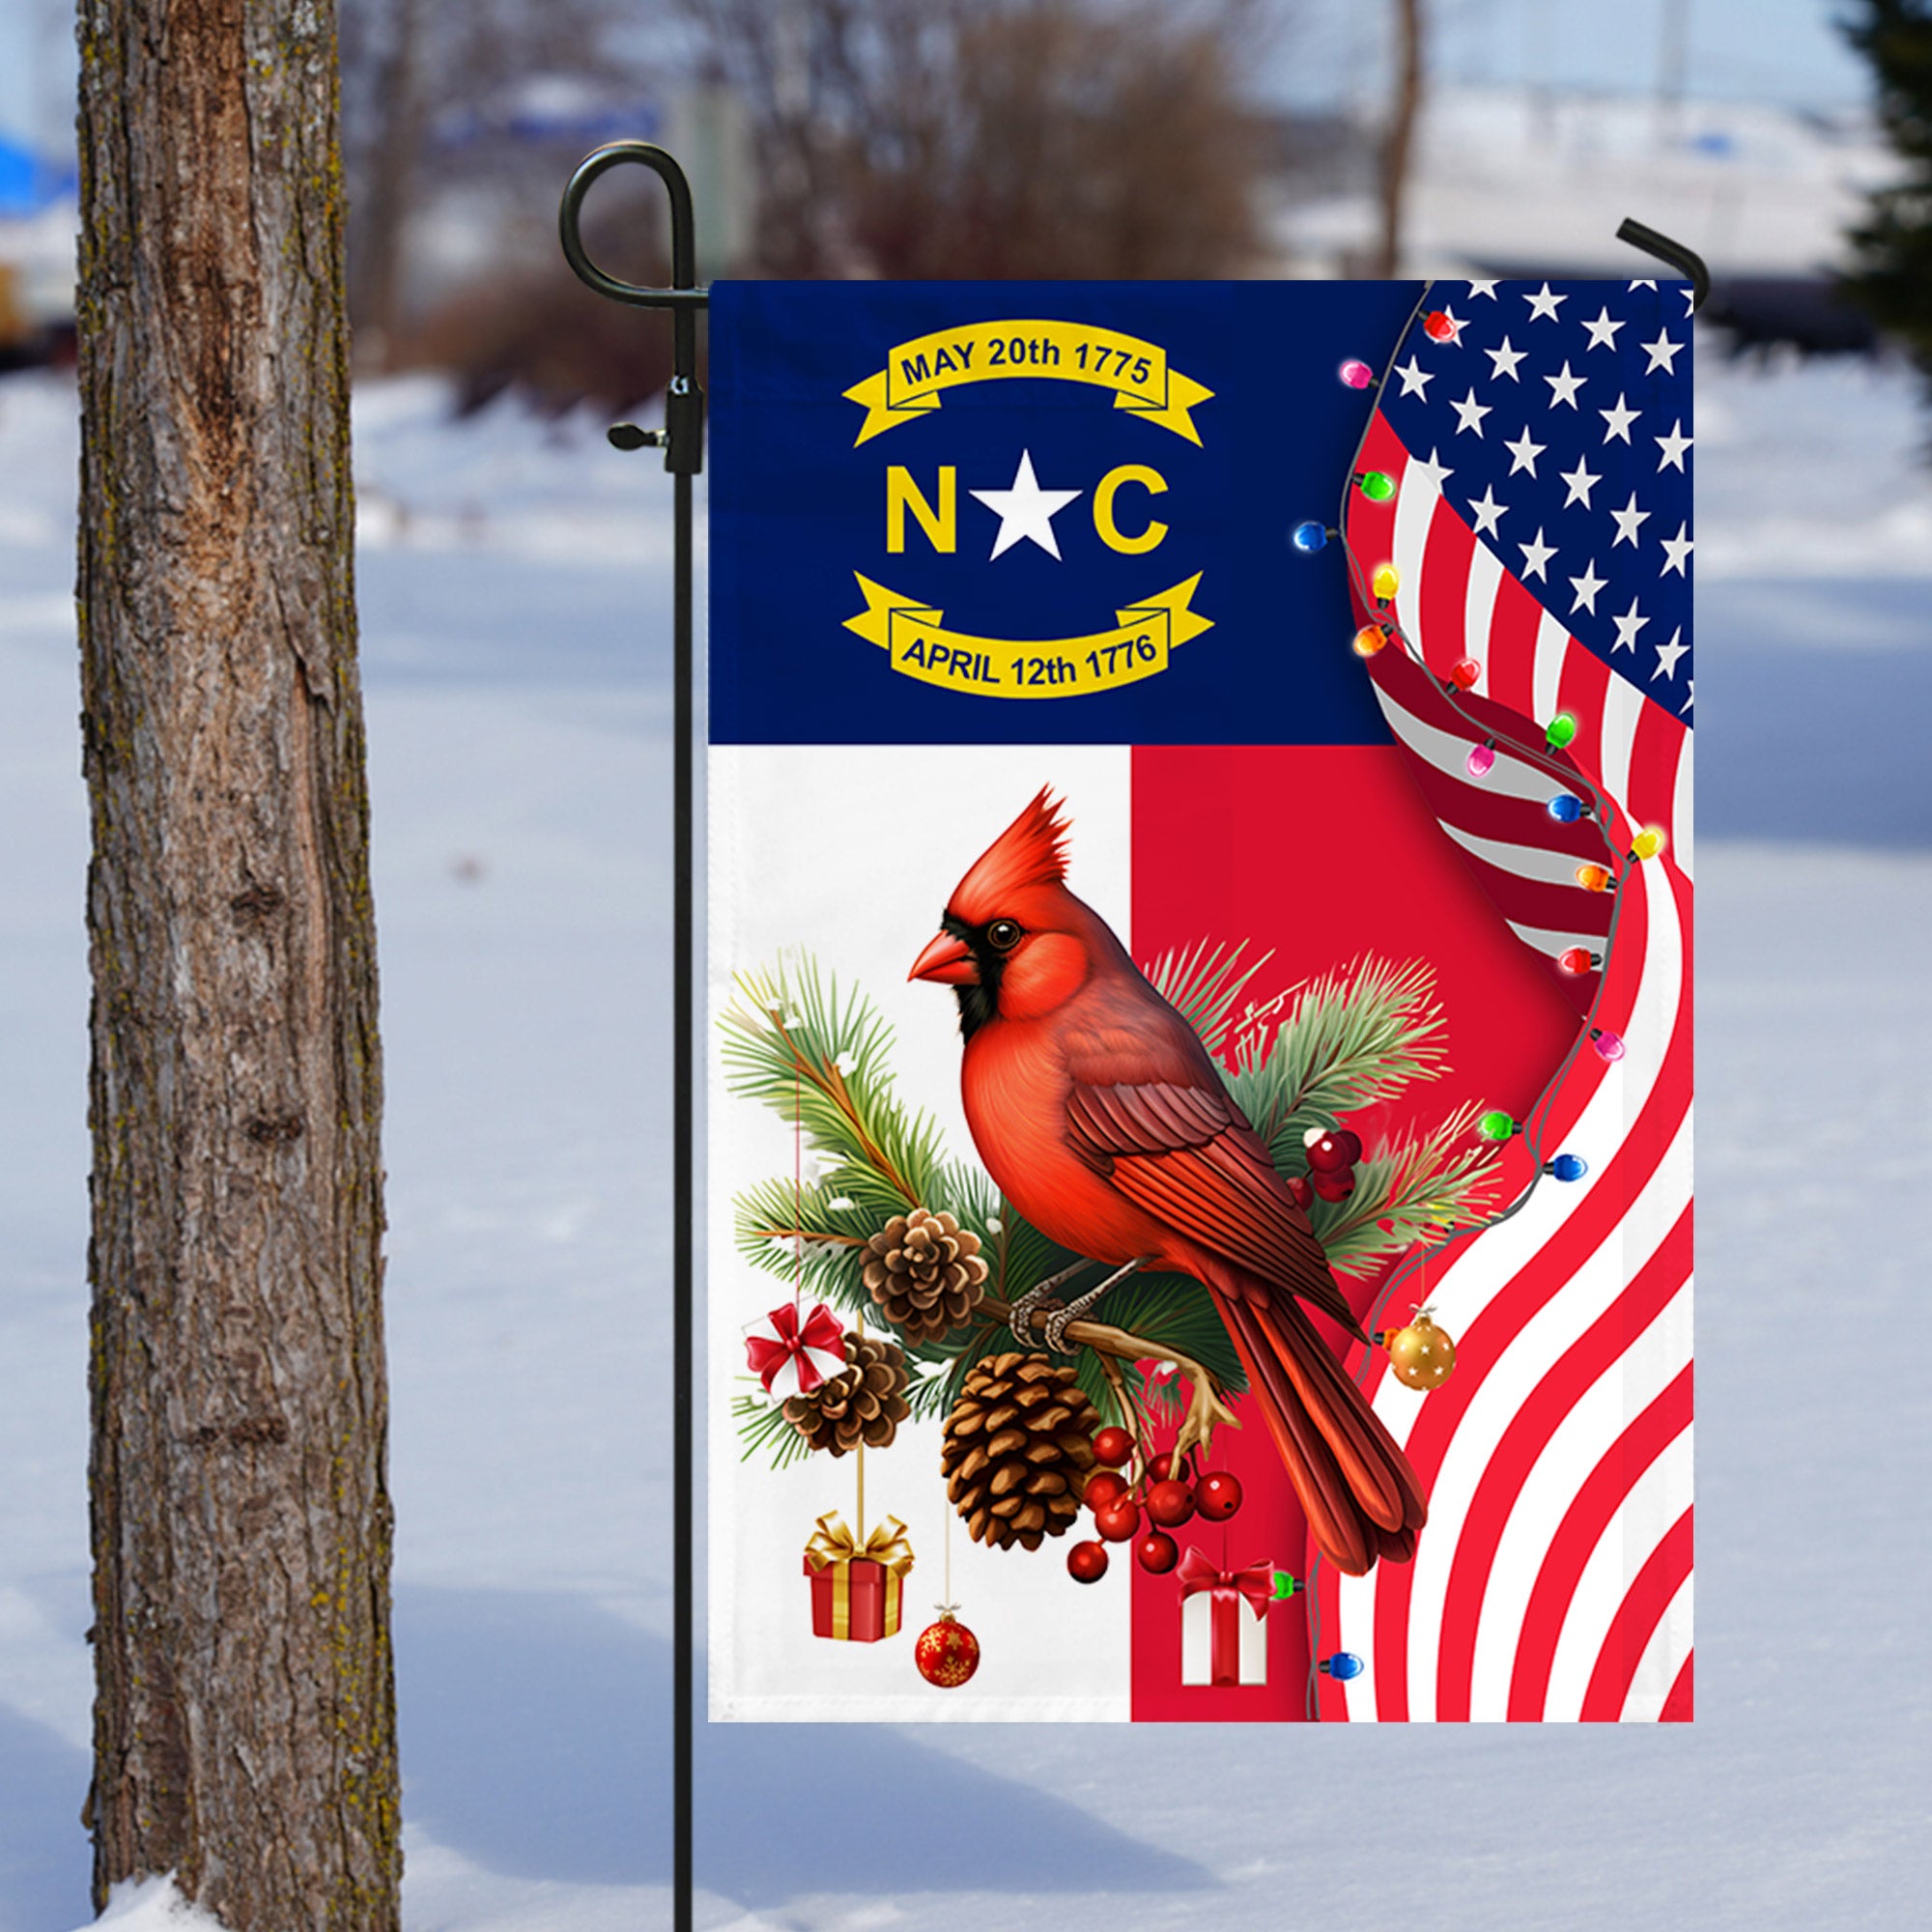 North Carolina State Xmas Flag - Merry Christmas Welcome Gift